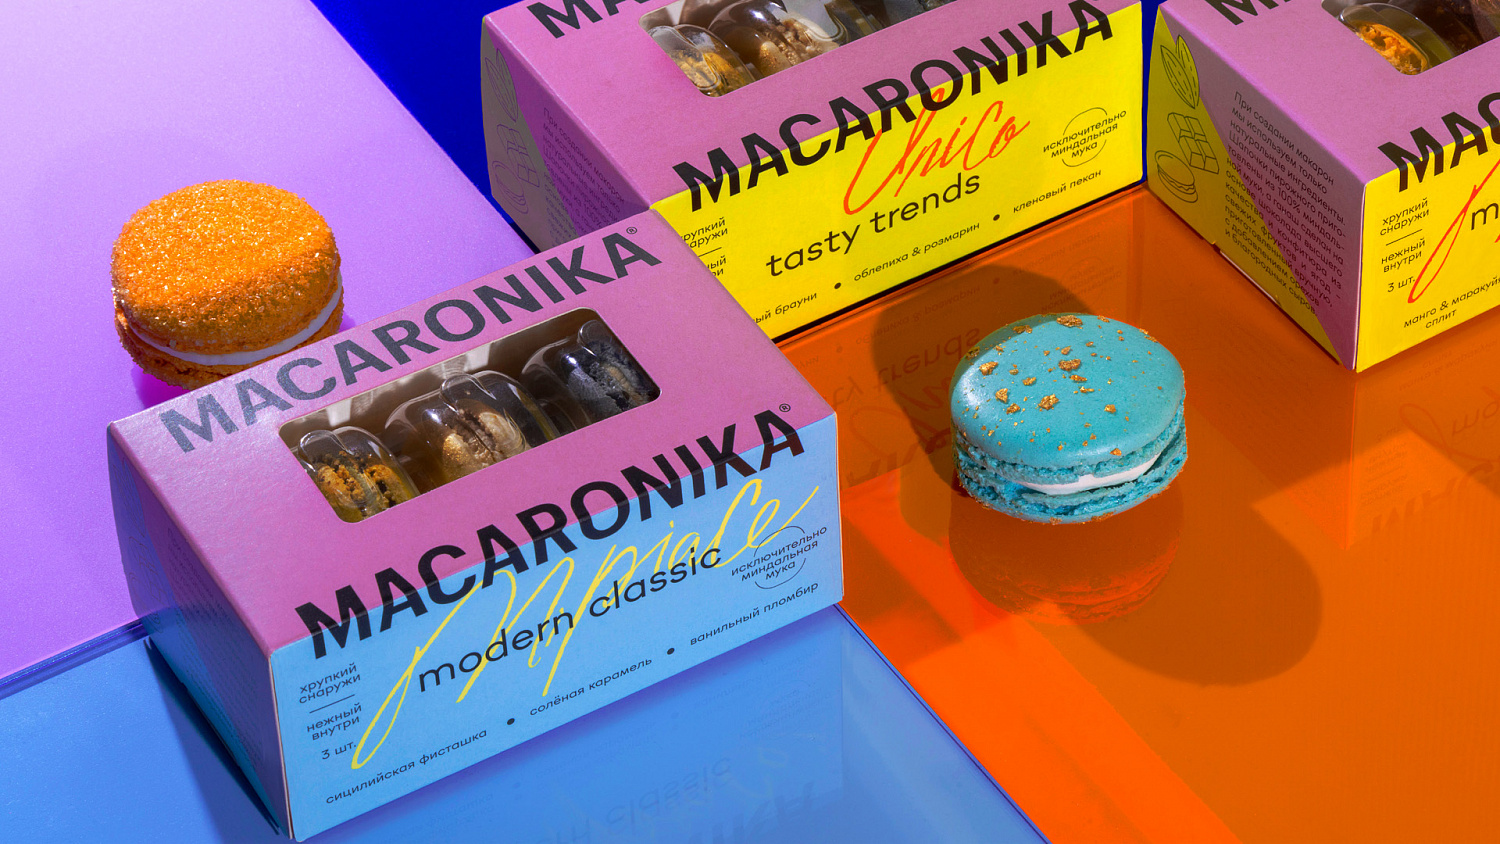 Macaronika - Портфолио Depot